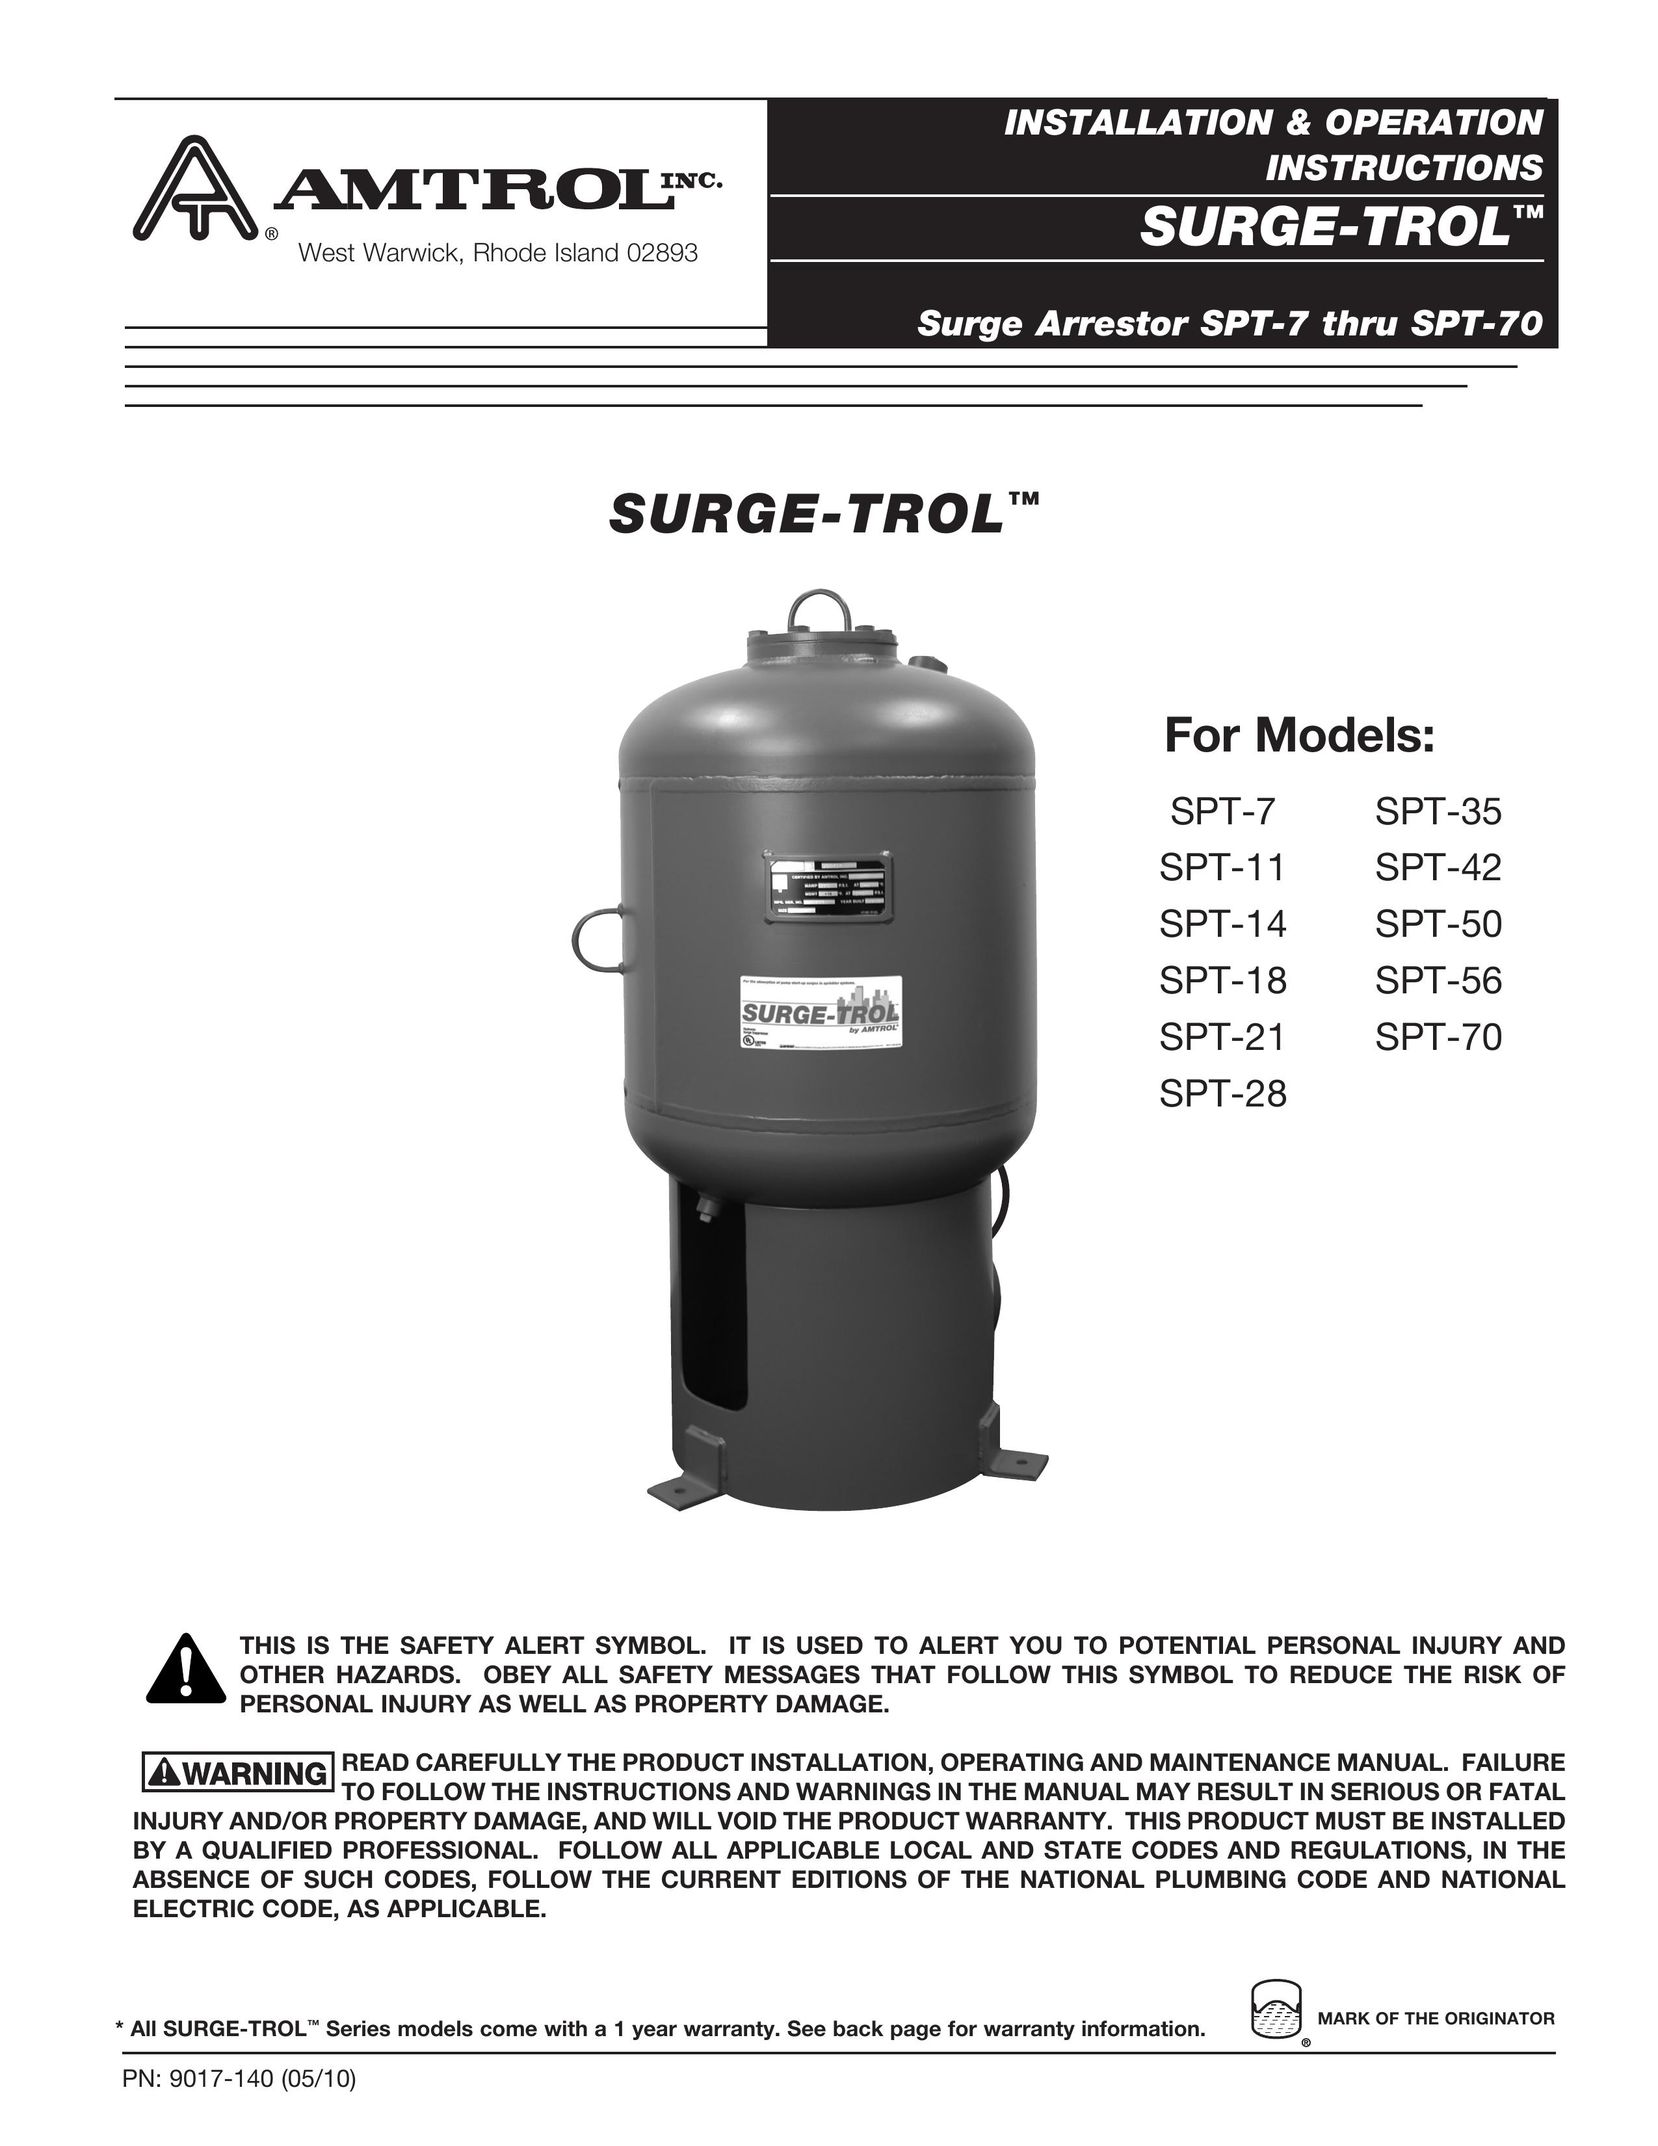 Amtrol SPT-56 Surge Protector User Manual